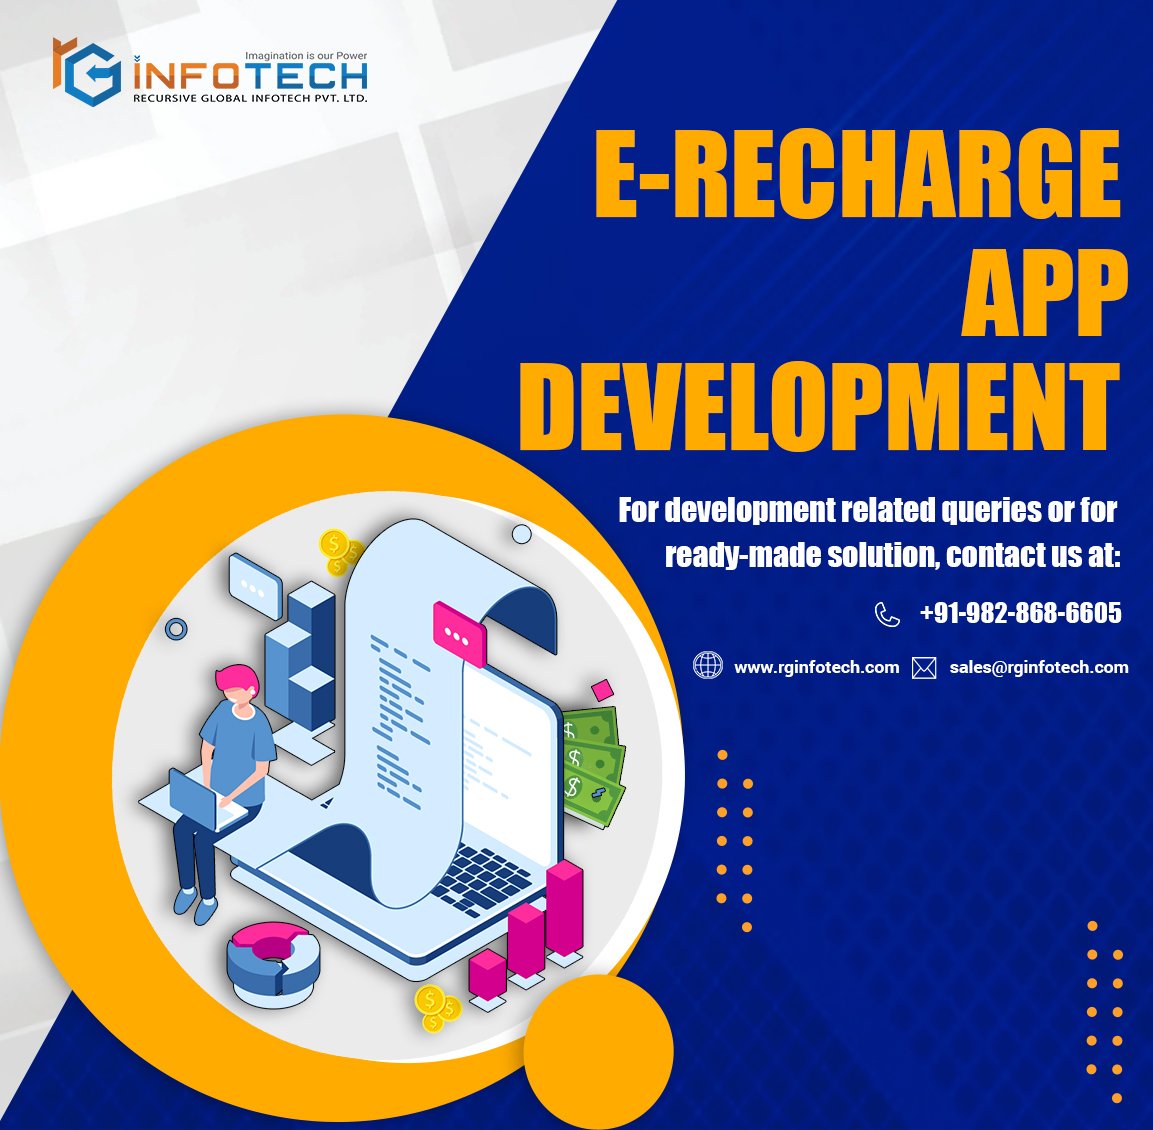 Recharge-App-Development